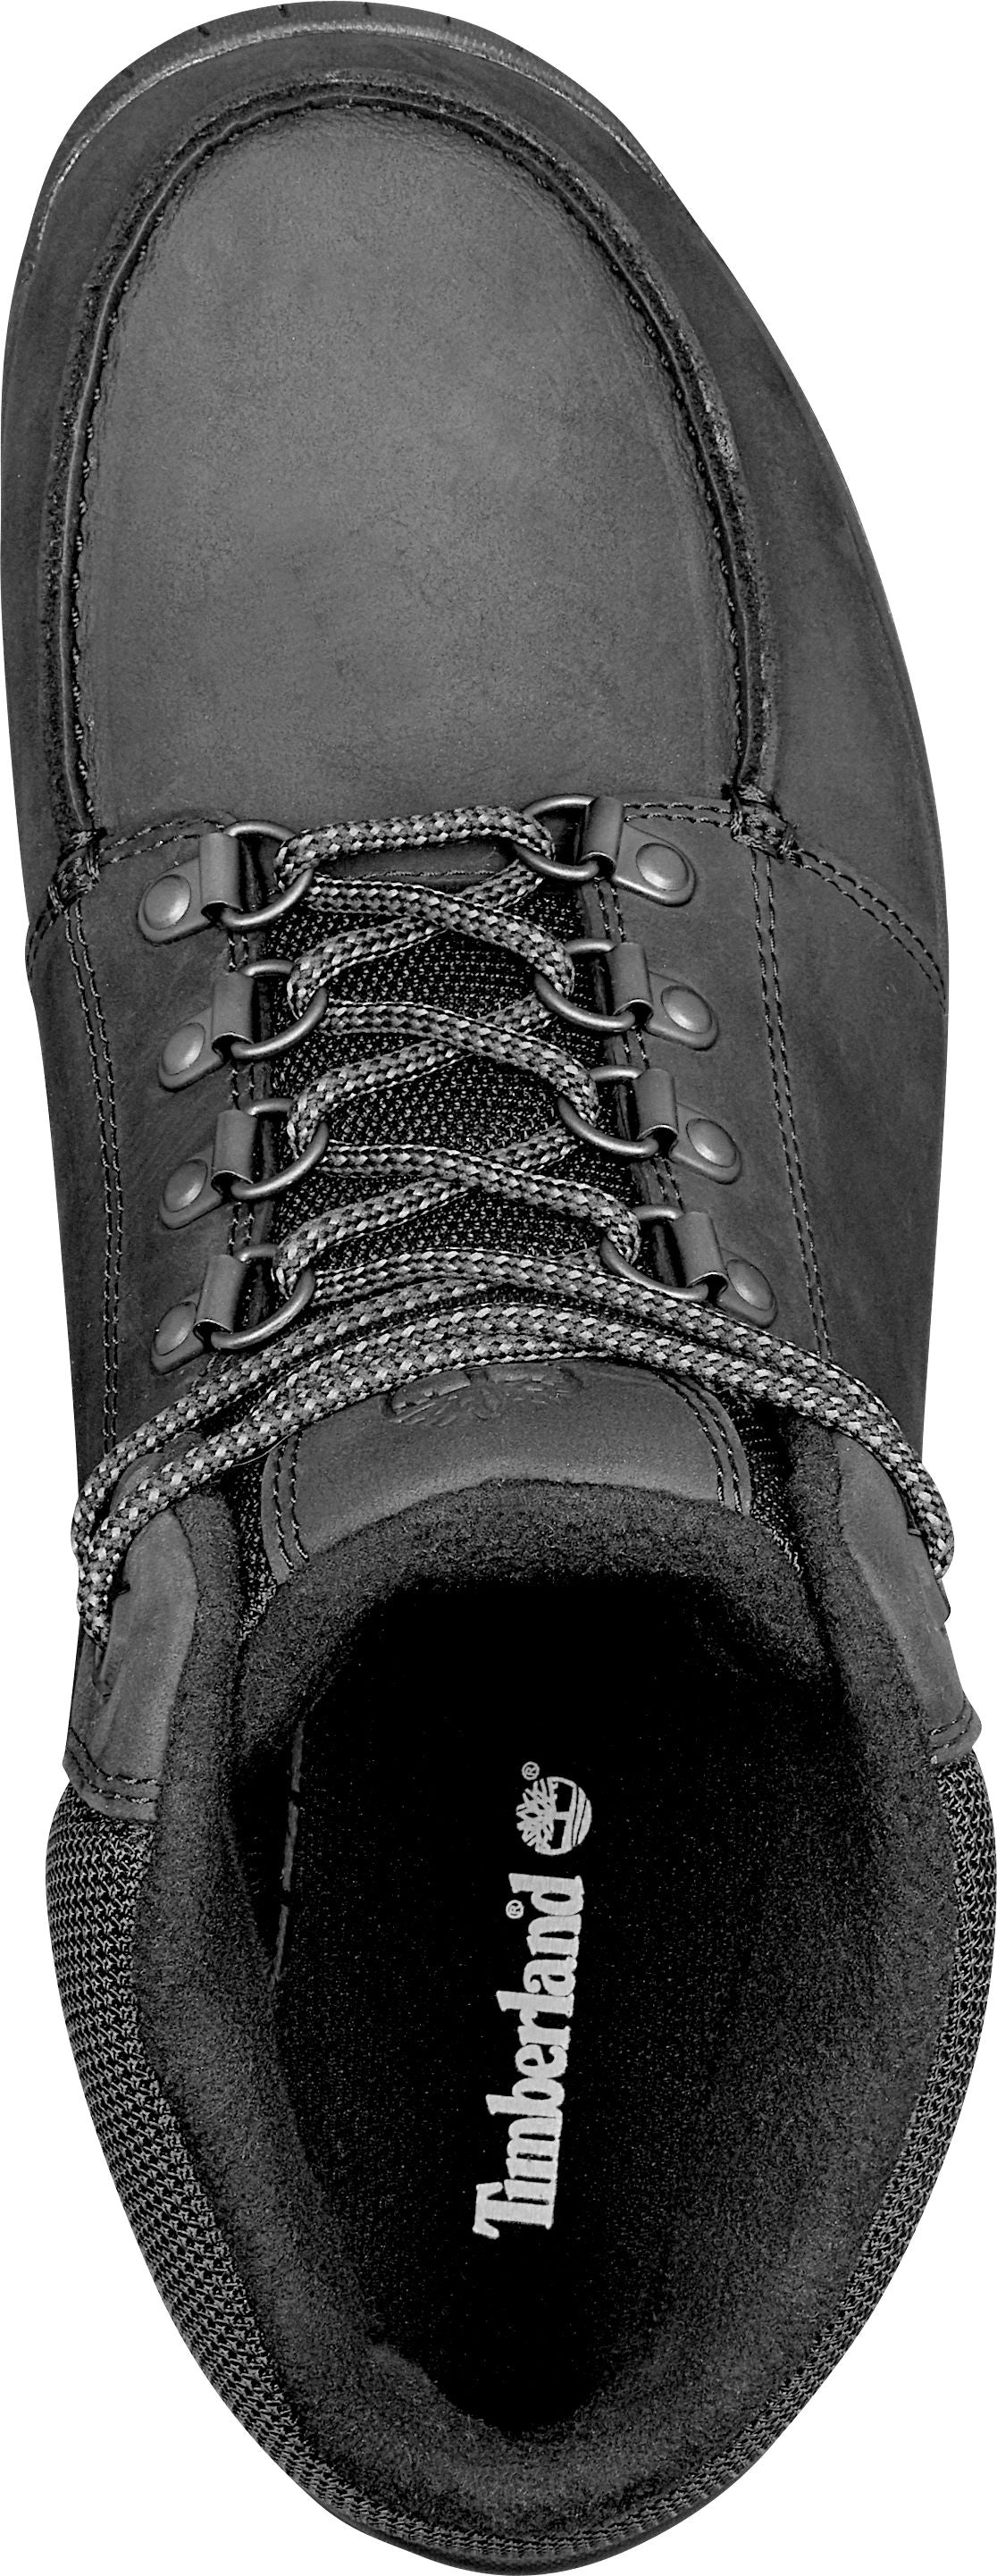 Timberland Boots Snowblades 400g Black